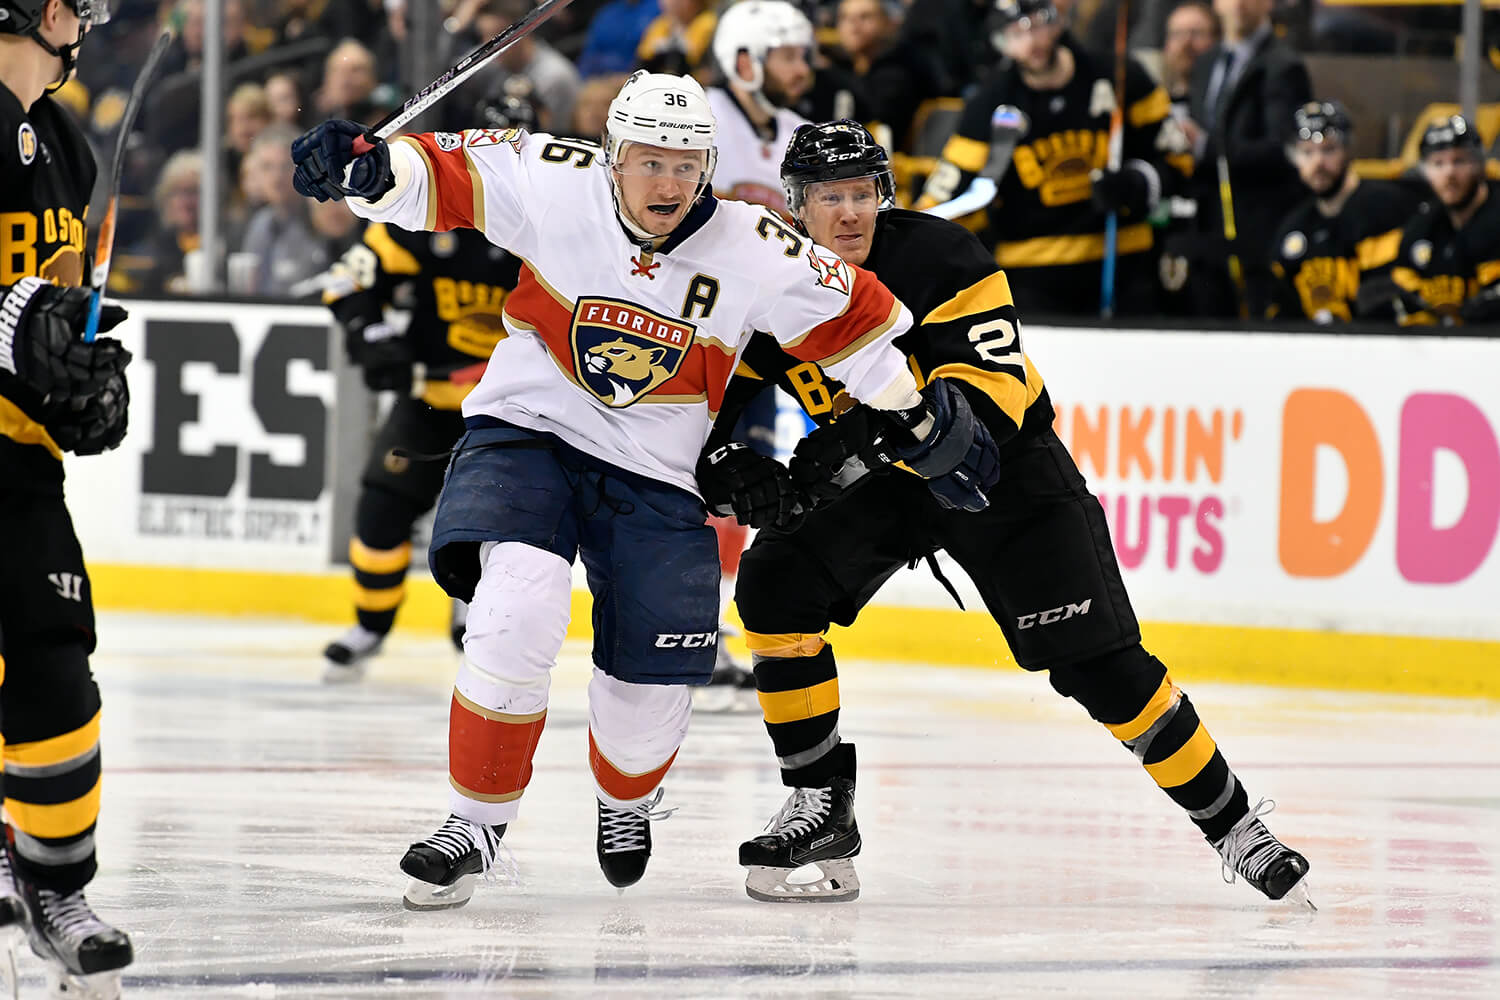 Photo Gallery: Panthers vs Bruins (4/1/17) - Inside Hockey